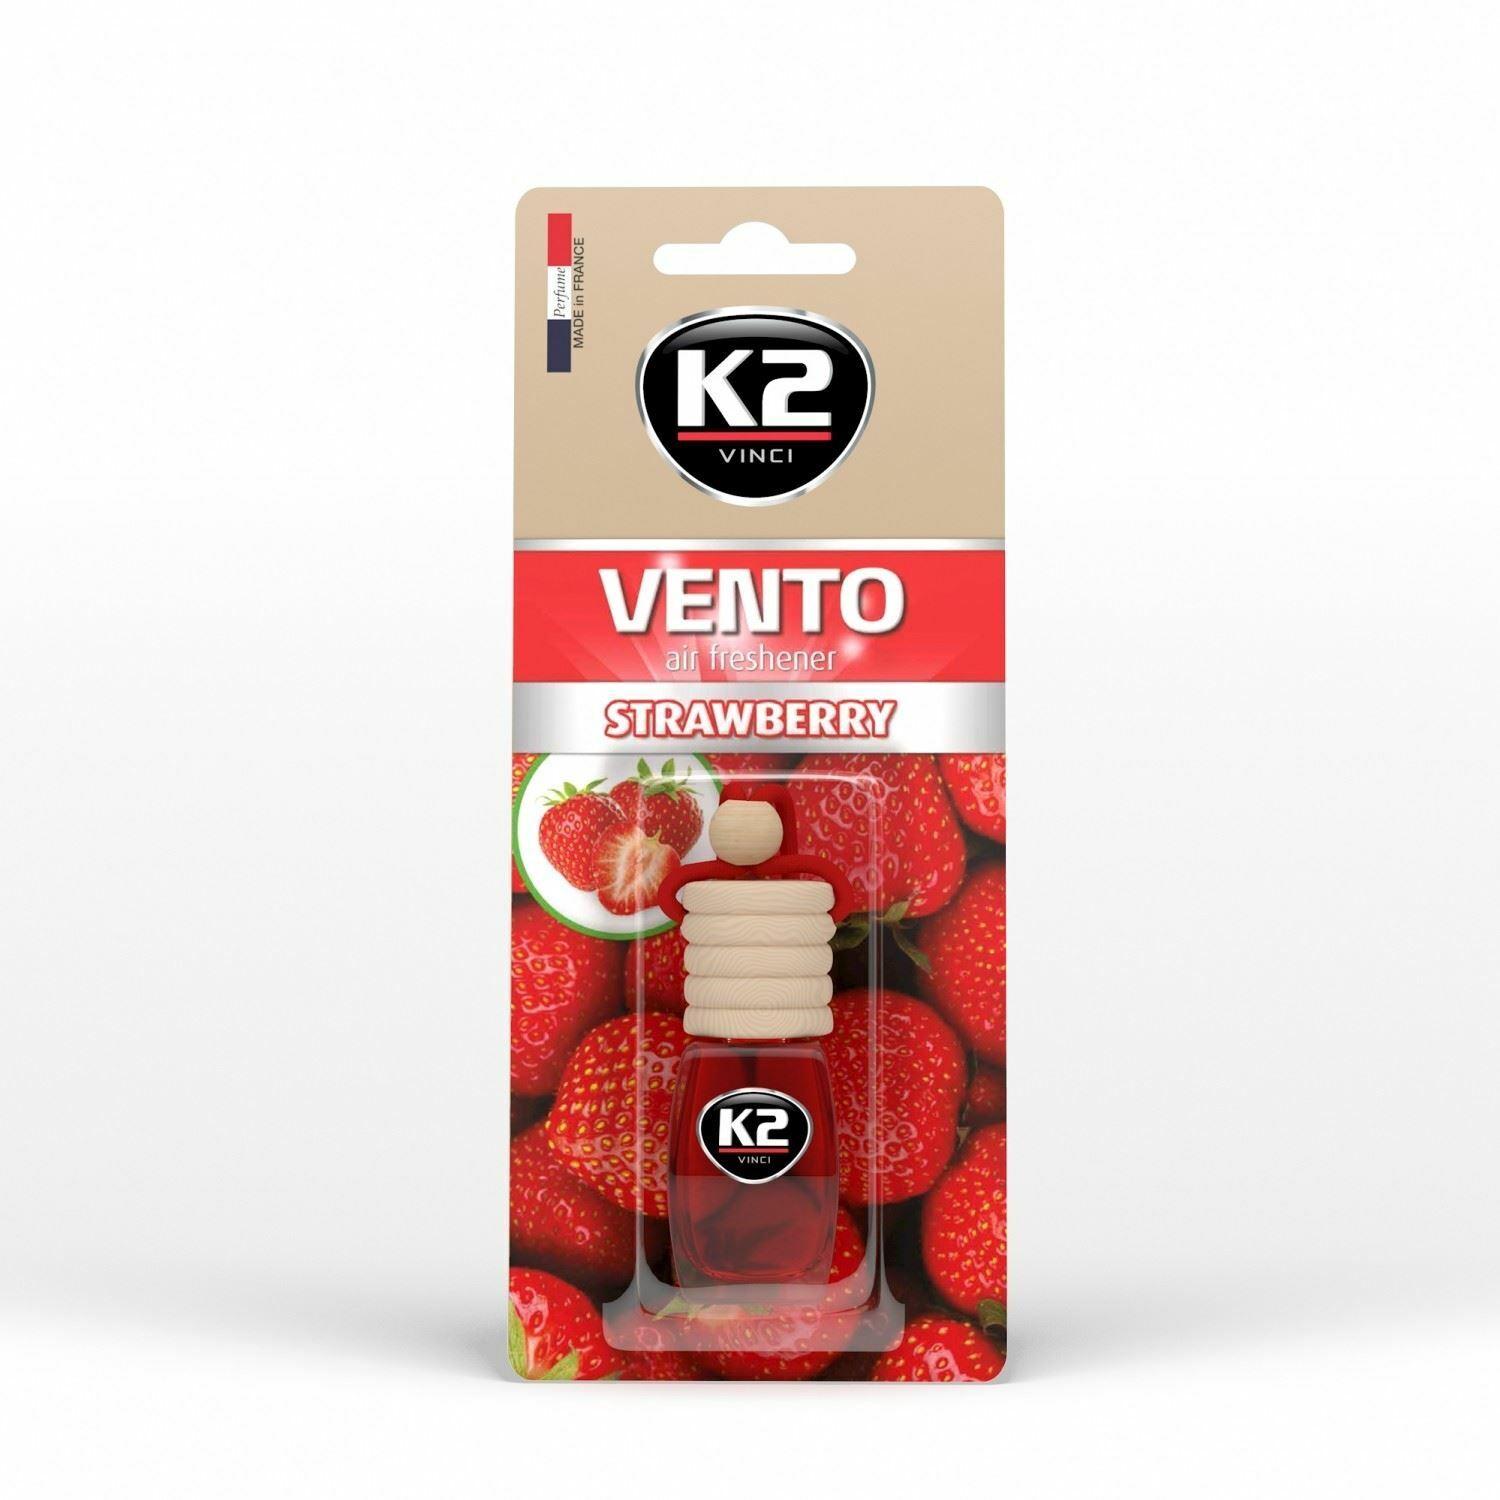 Selected image for K2 Osvezivač strawberry vento 8ml